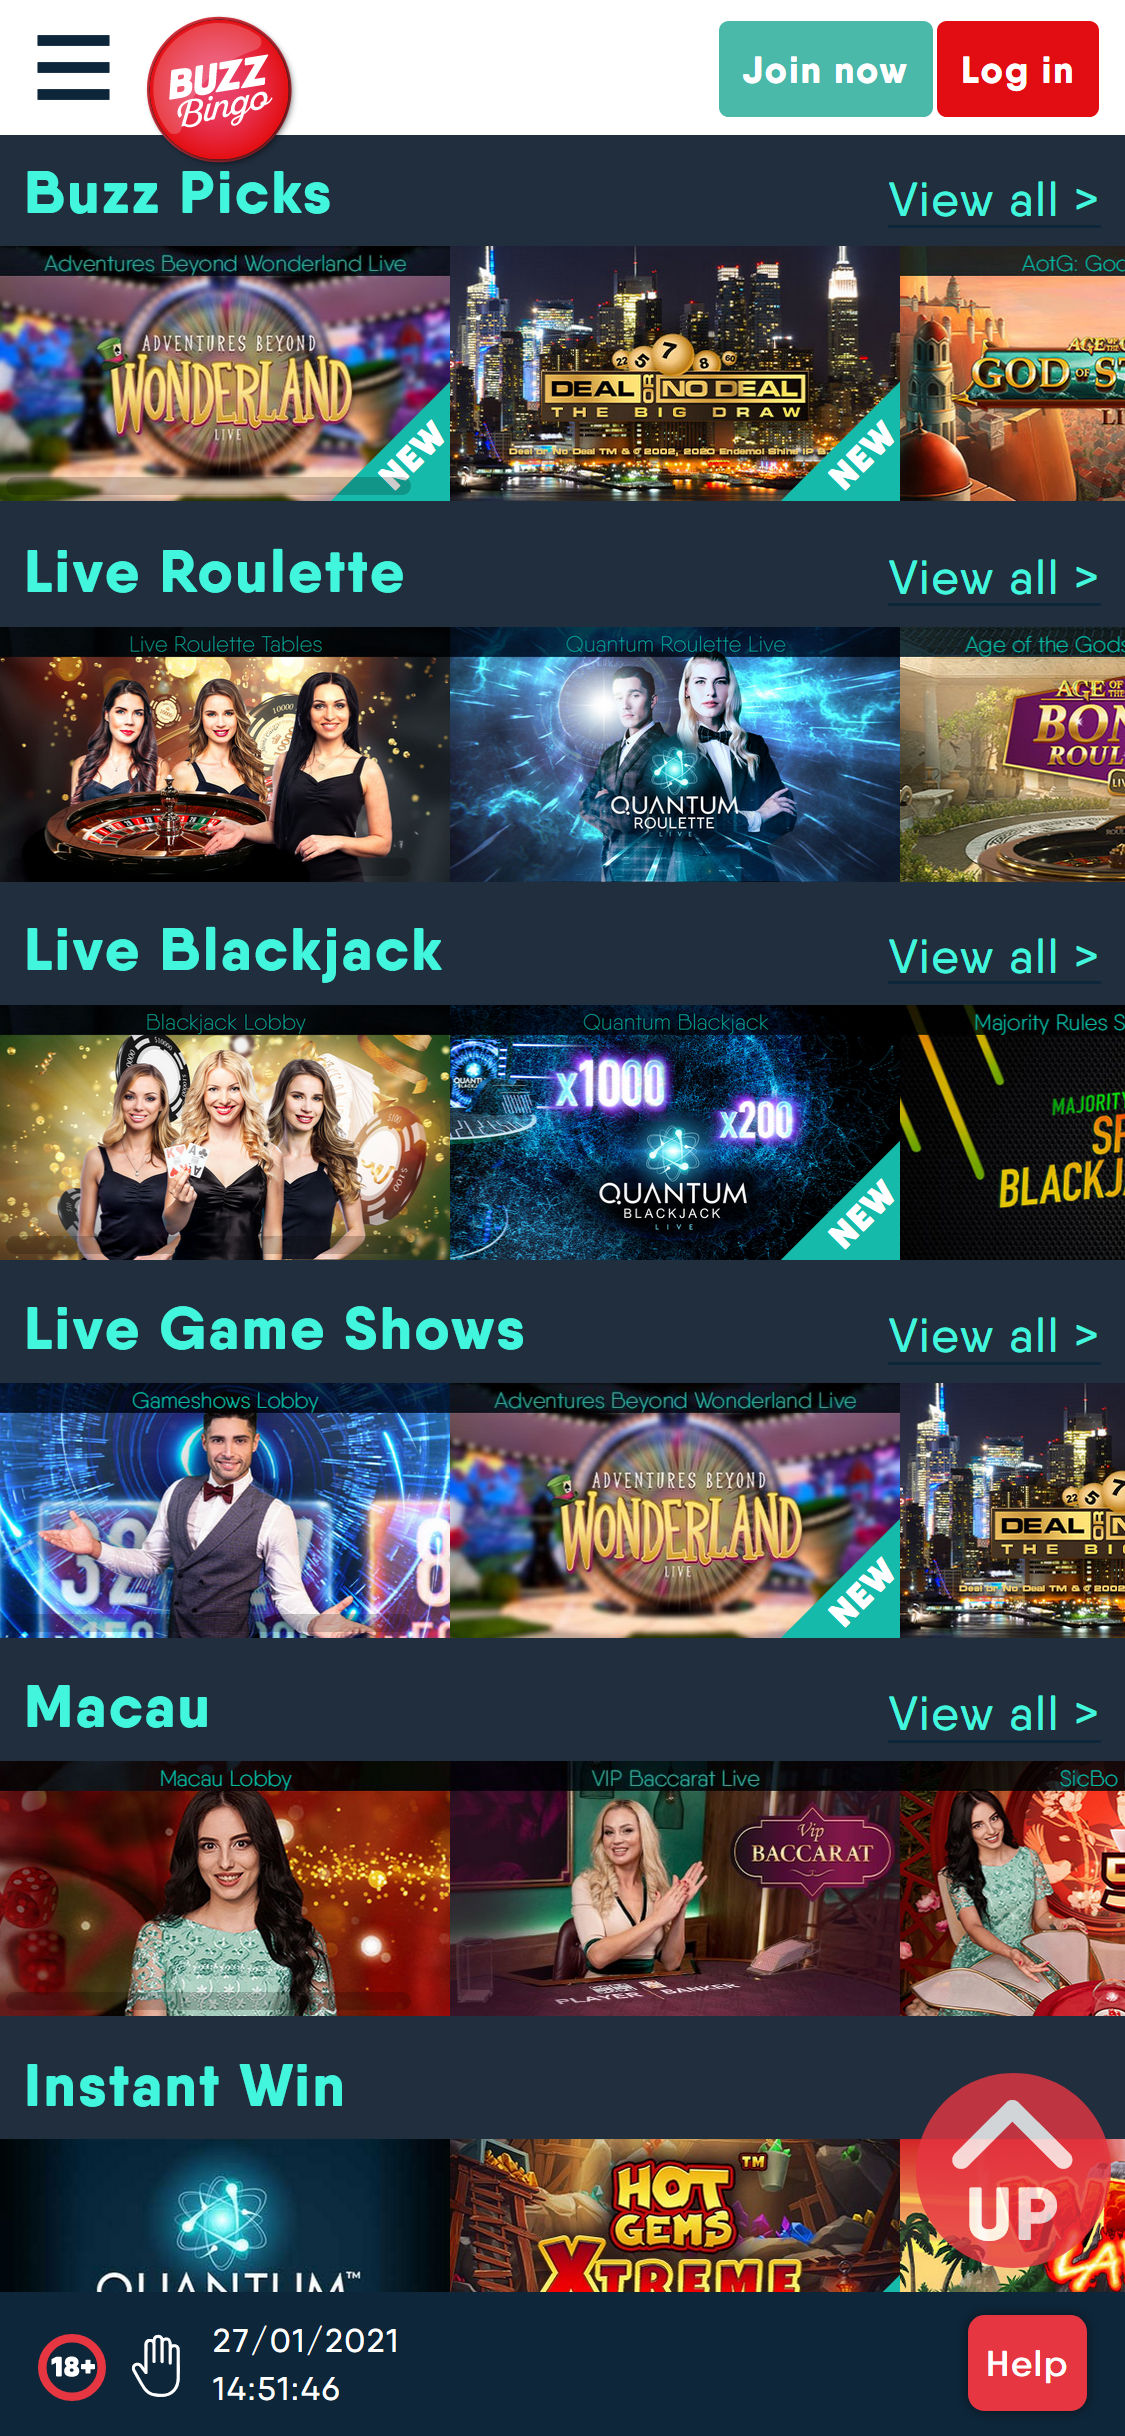 Buzz Bingo Casino Mobile Live Dealer Games Review